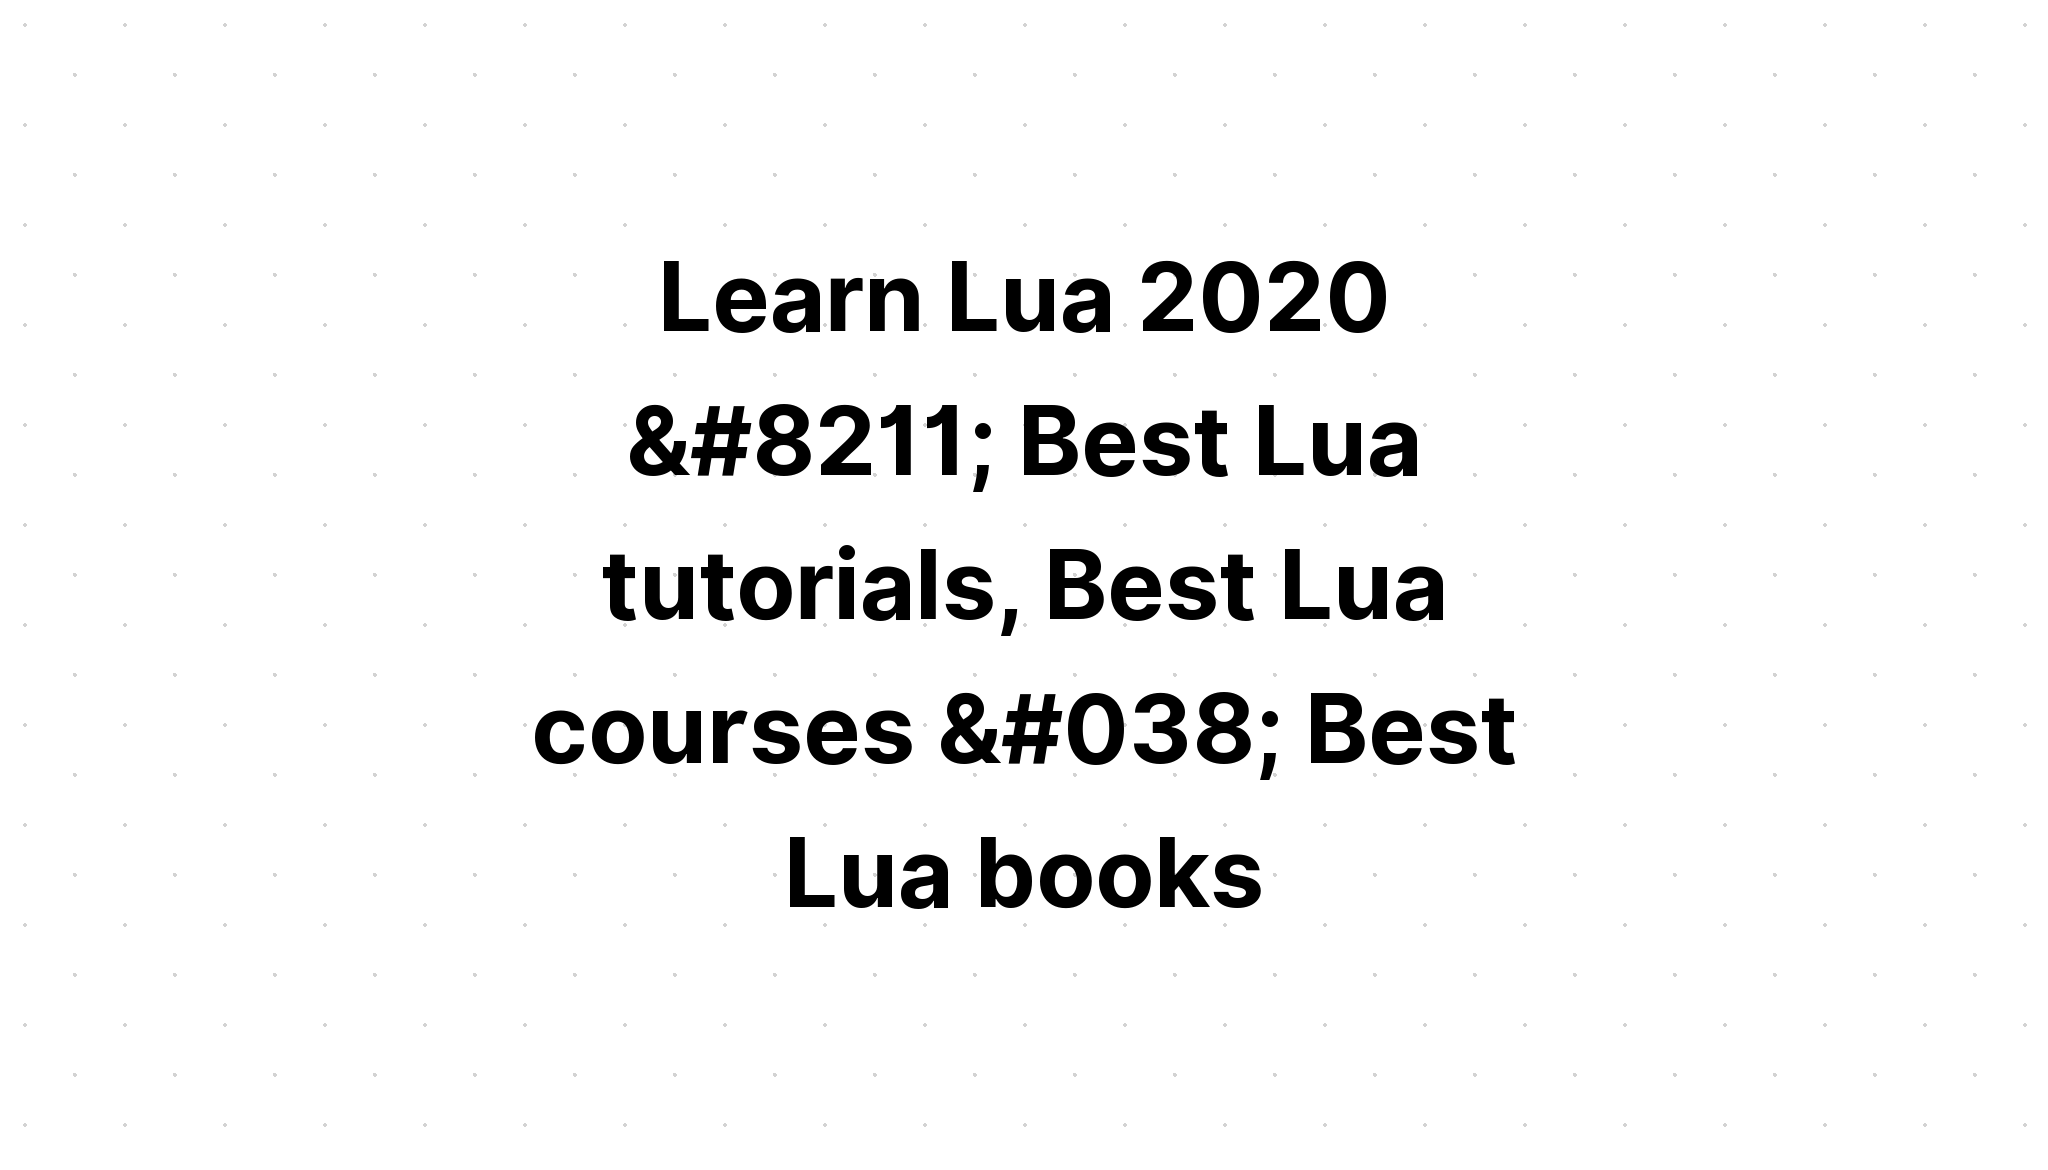 Learn Lua 2020 Best Lua Tutorials Best Lua Courses Best Lua Books Reactdom - intermediate roblox programming black and white brandon john